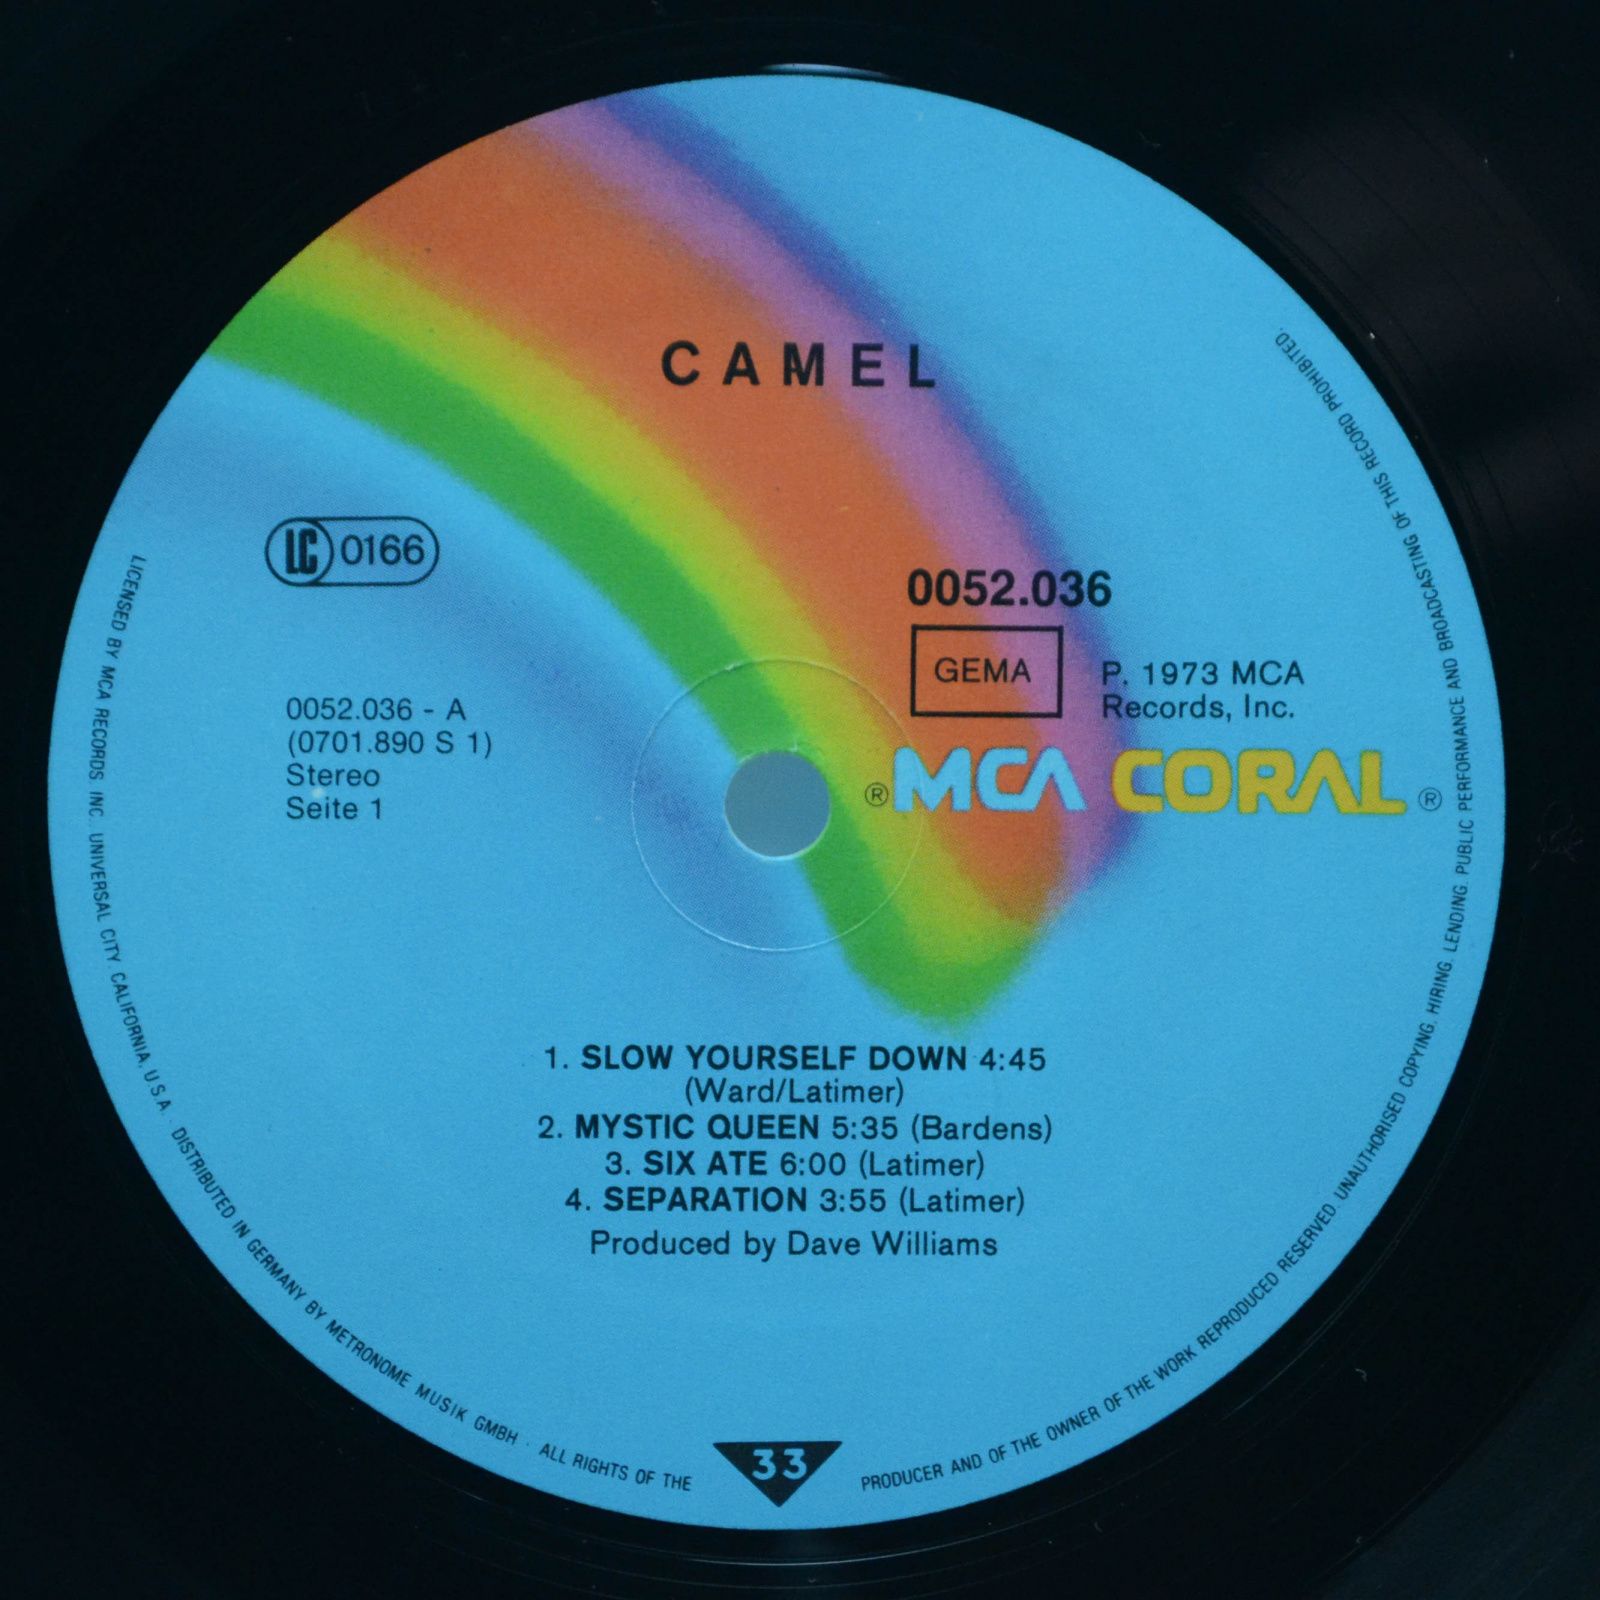 Camel — Camel, 1973